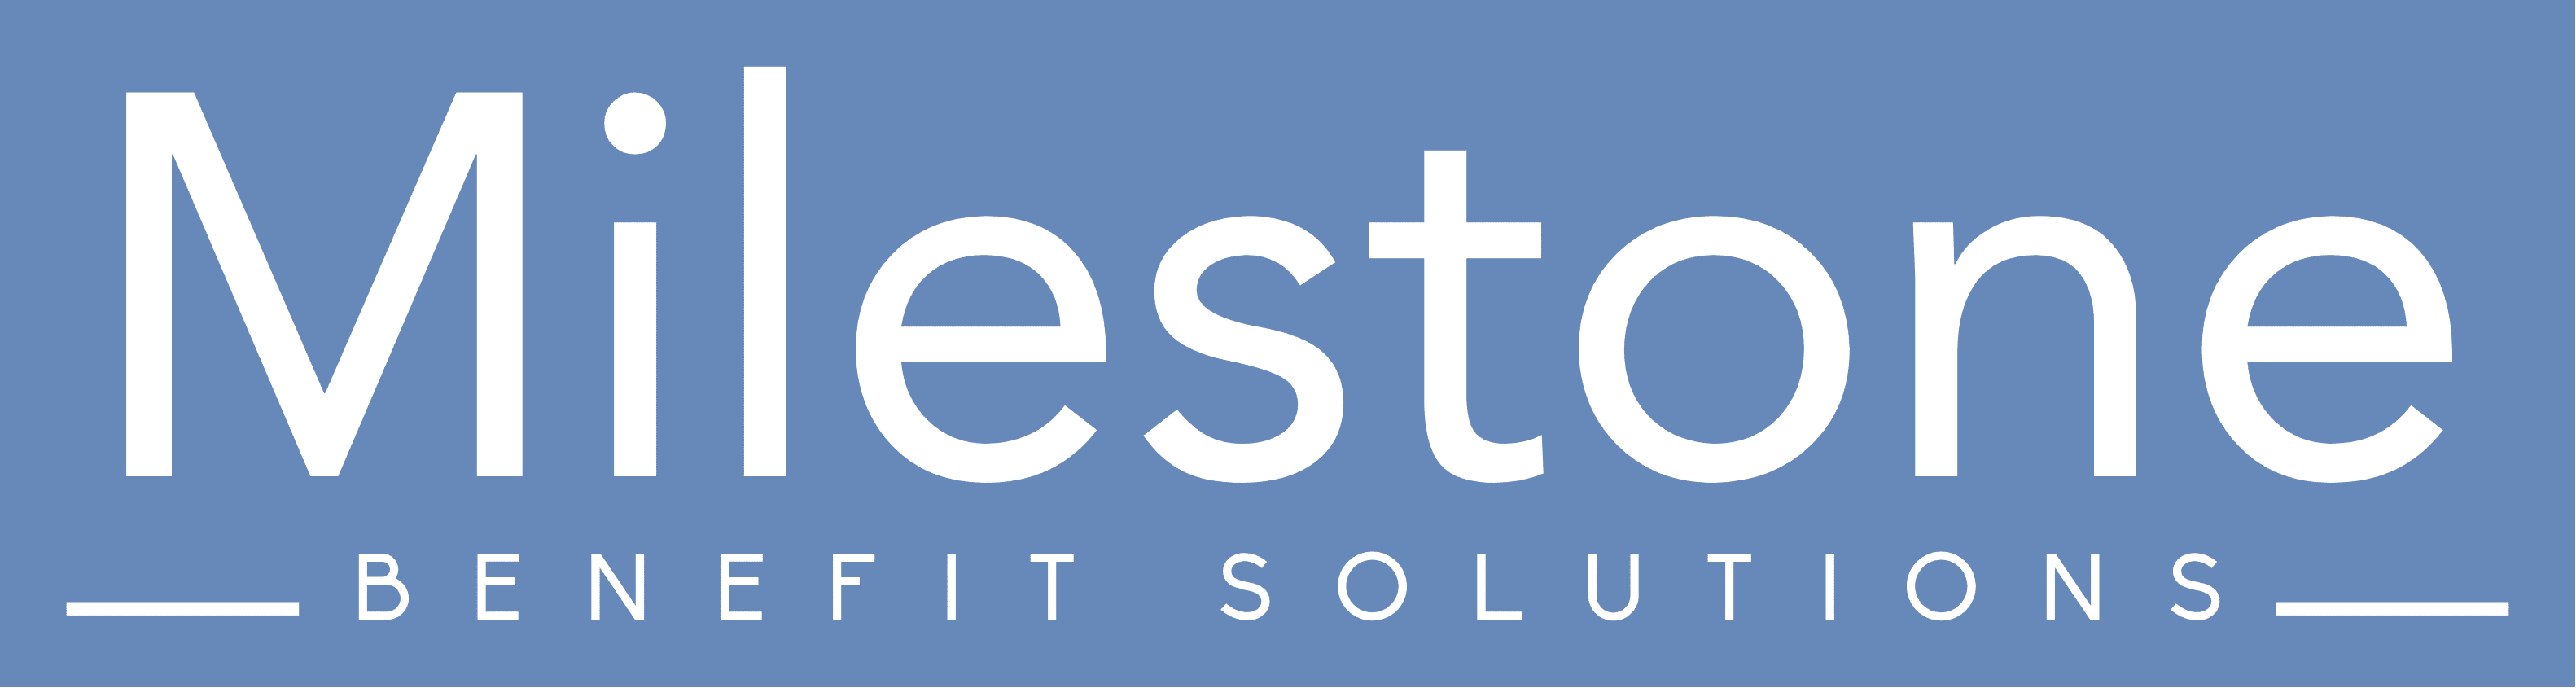 Milestone Benefit Solutions